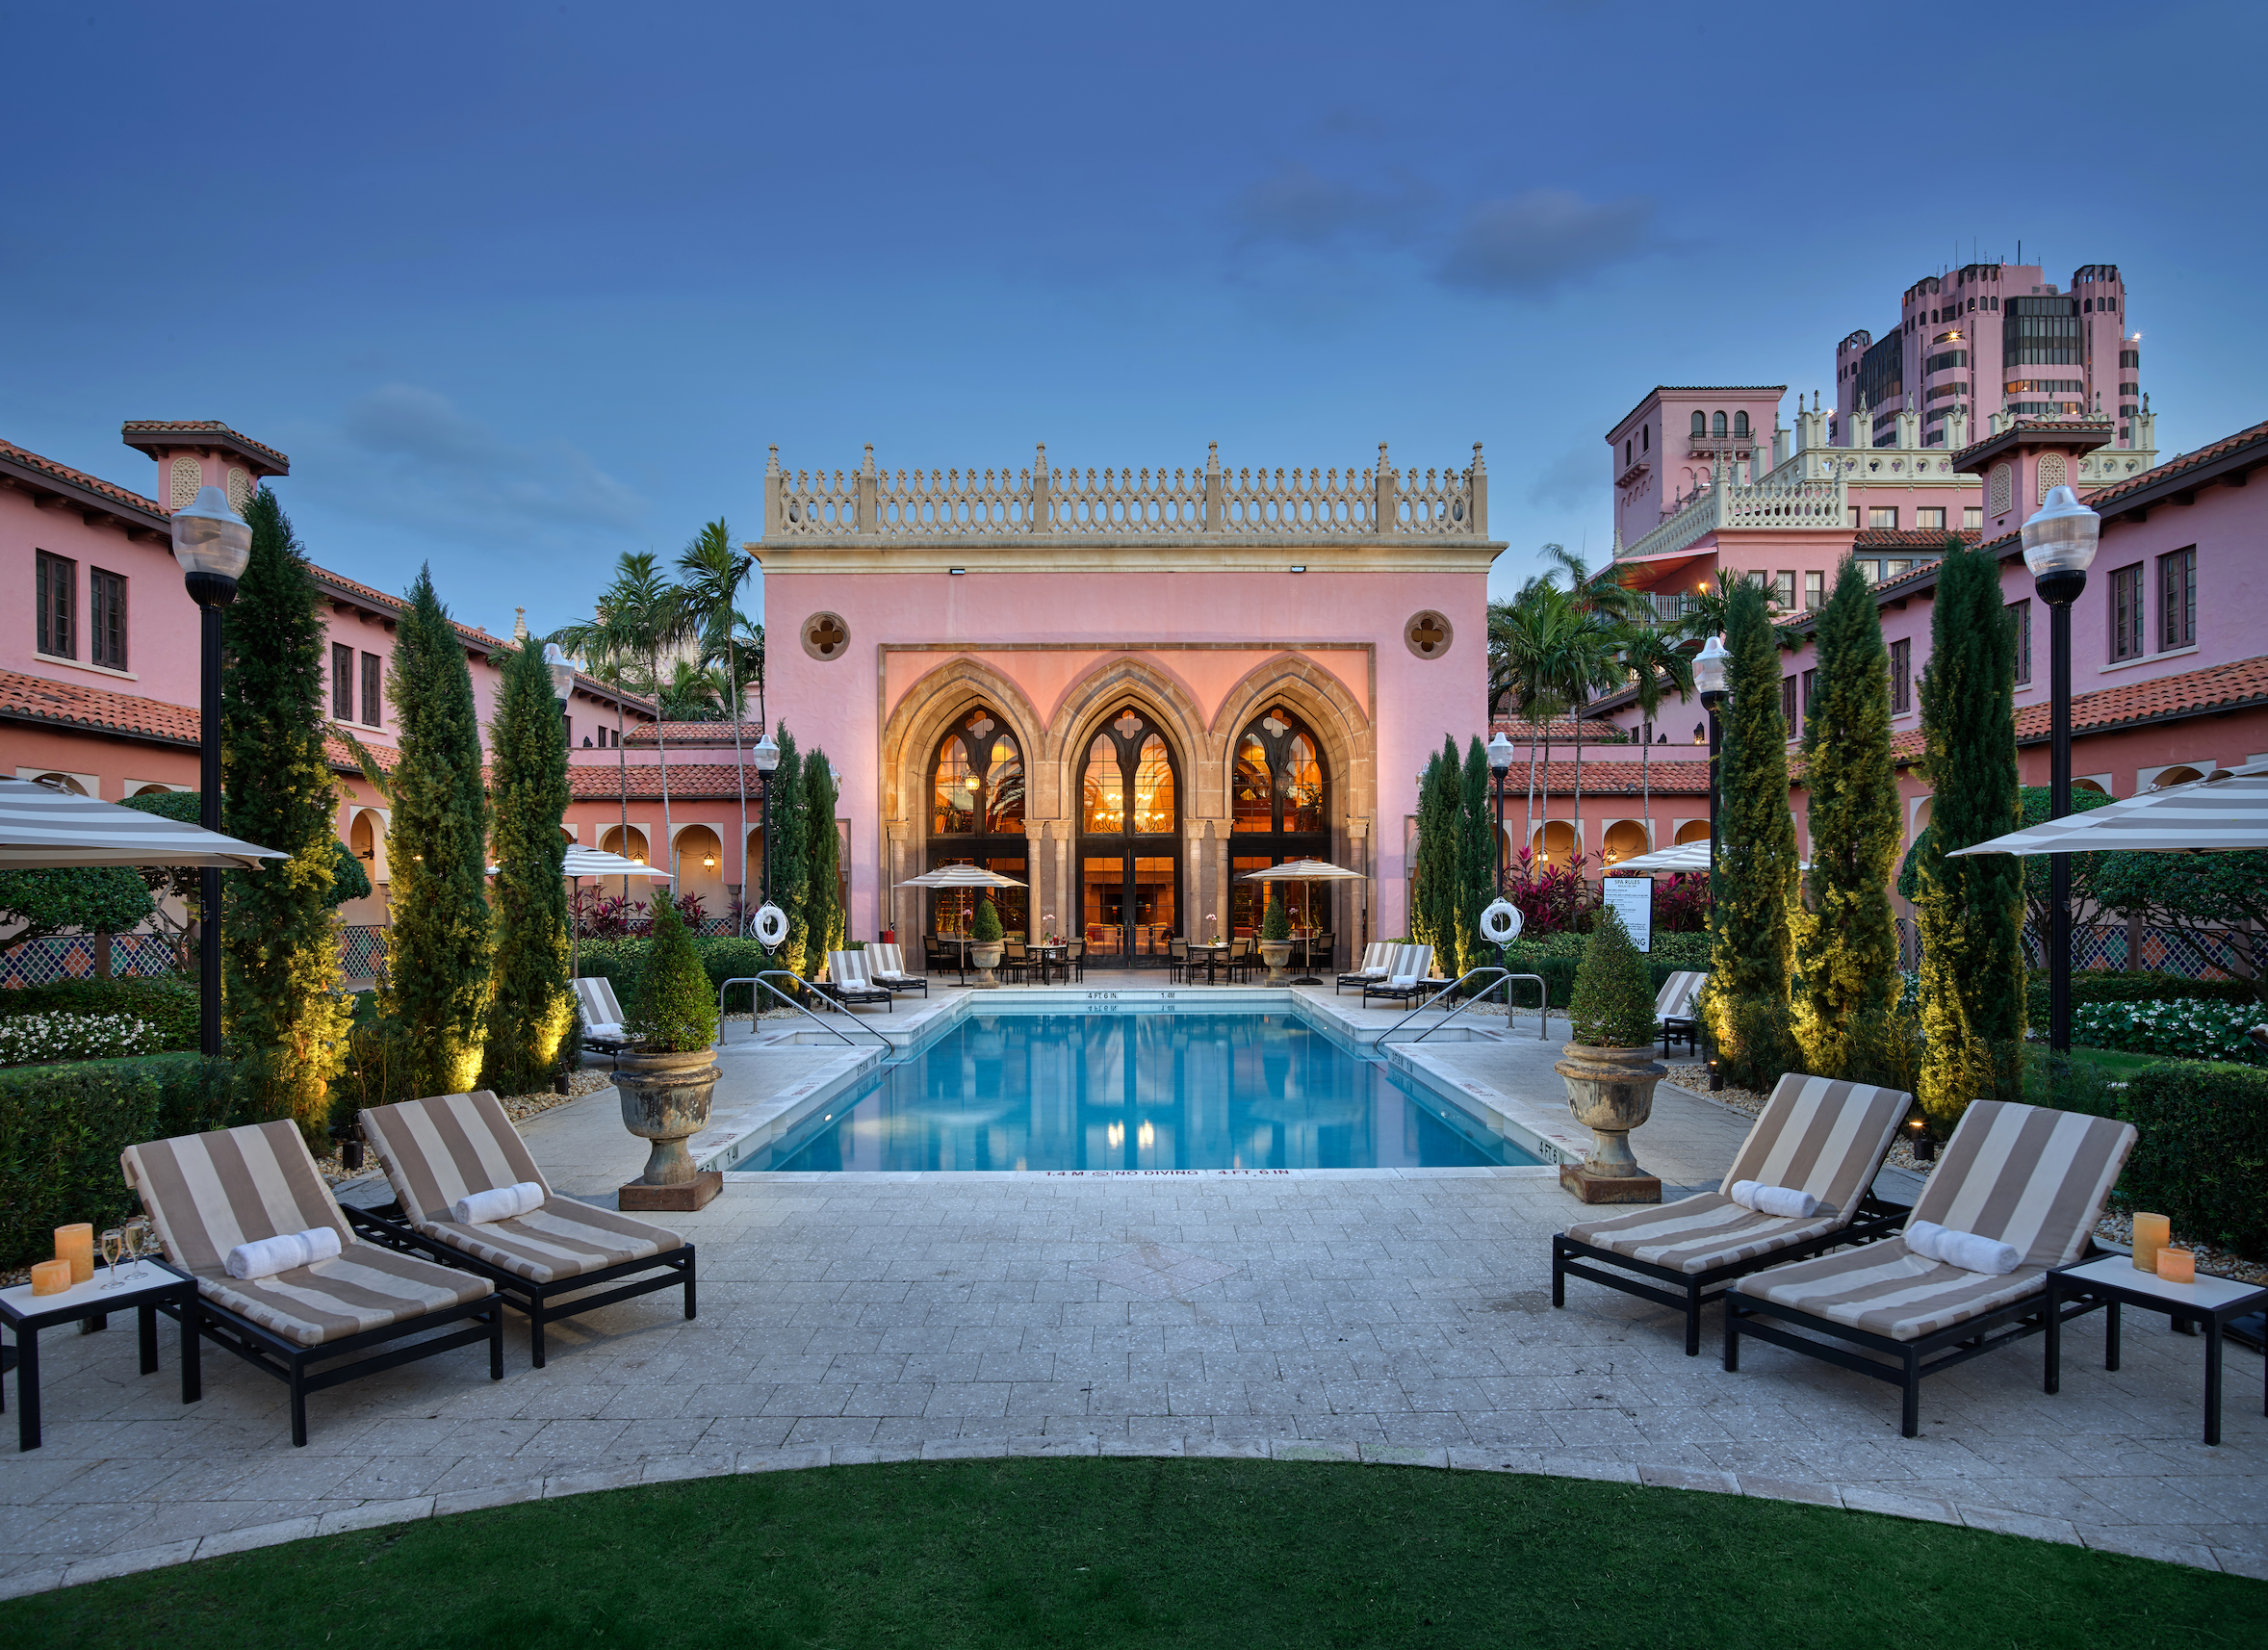 Spa of the Week: Waldorf Astoria Spa at Boca Raton Resort & Club